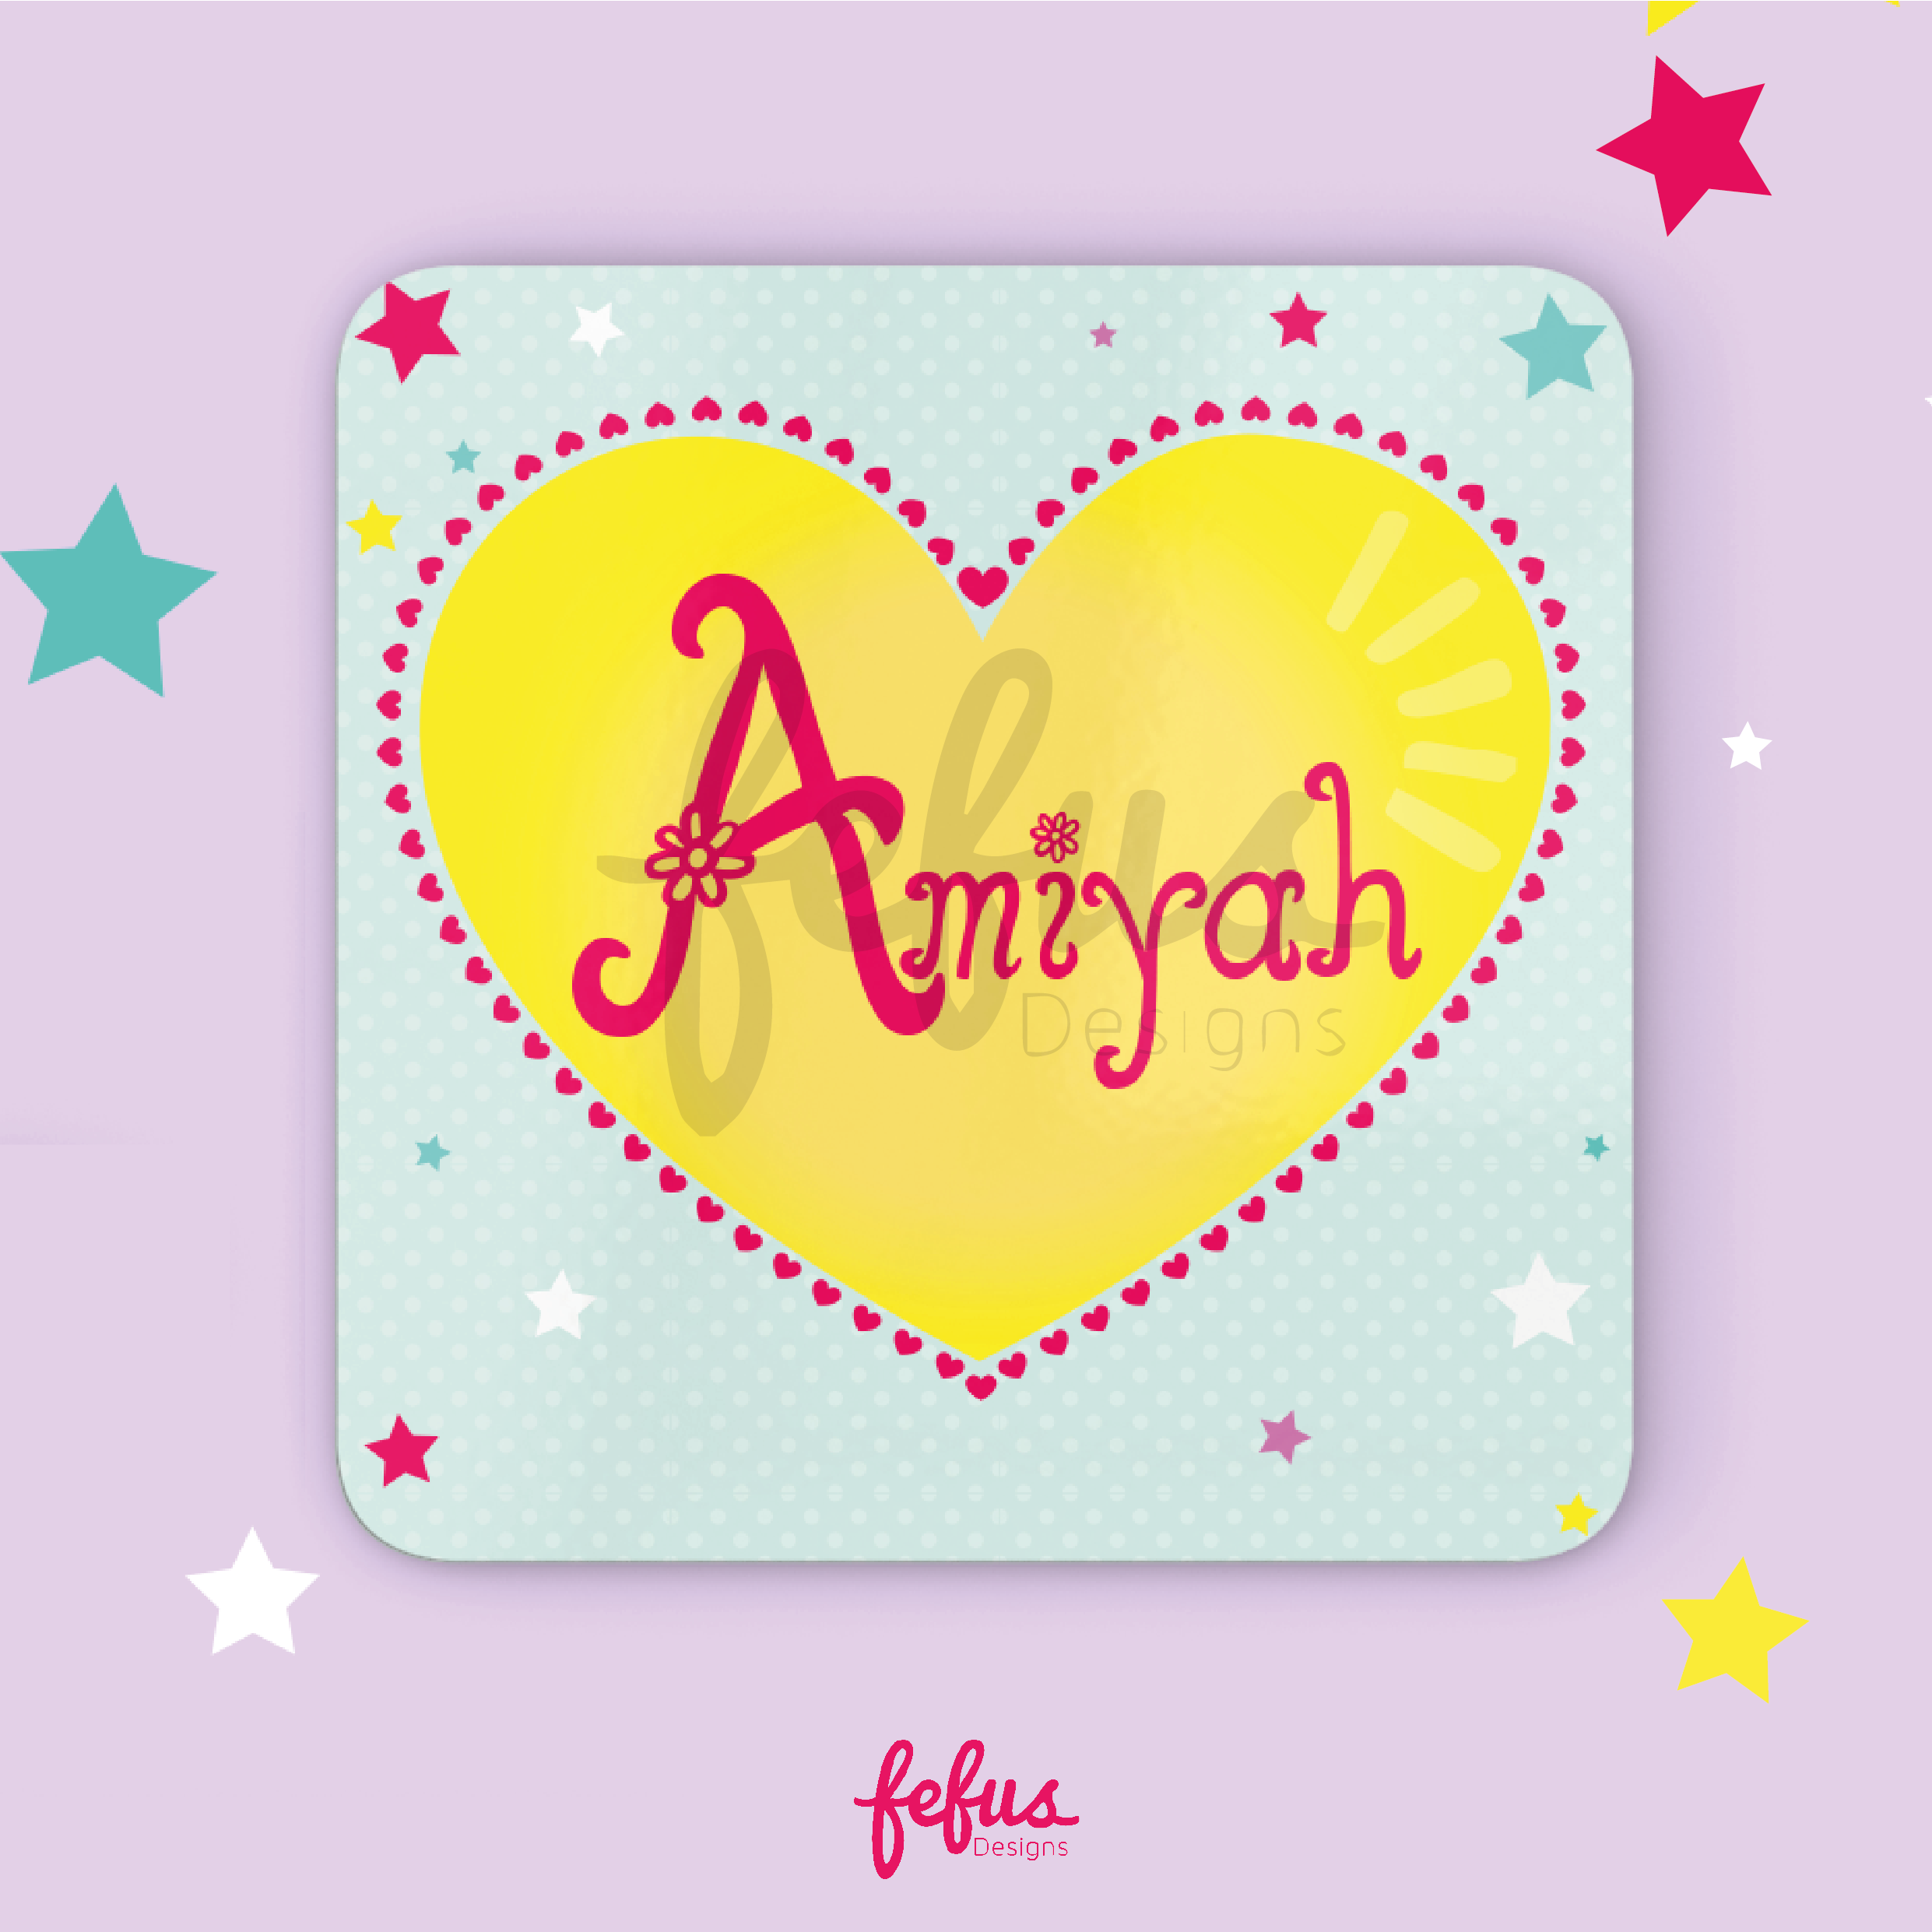 Ariyonna Spark Imagination & Celebrate Culture: Personalised Rasta Fairy Placemat & Coaster Set